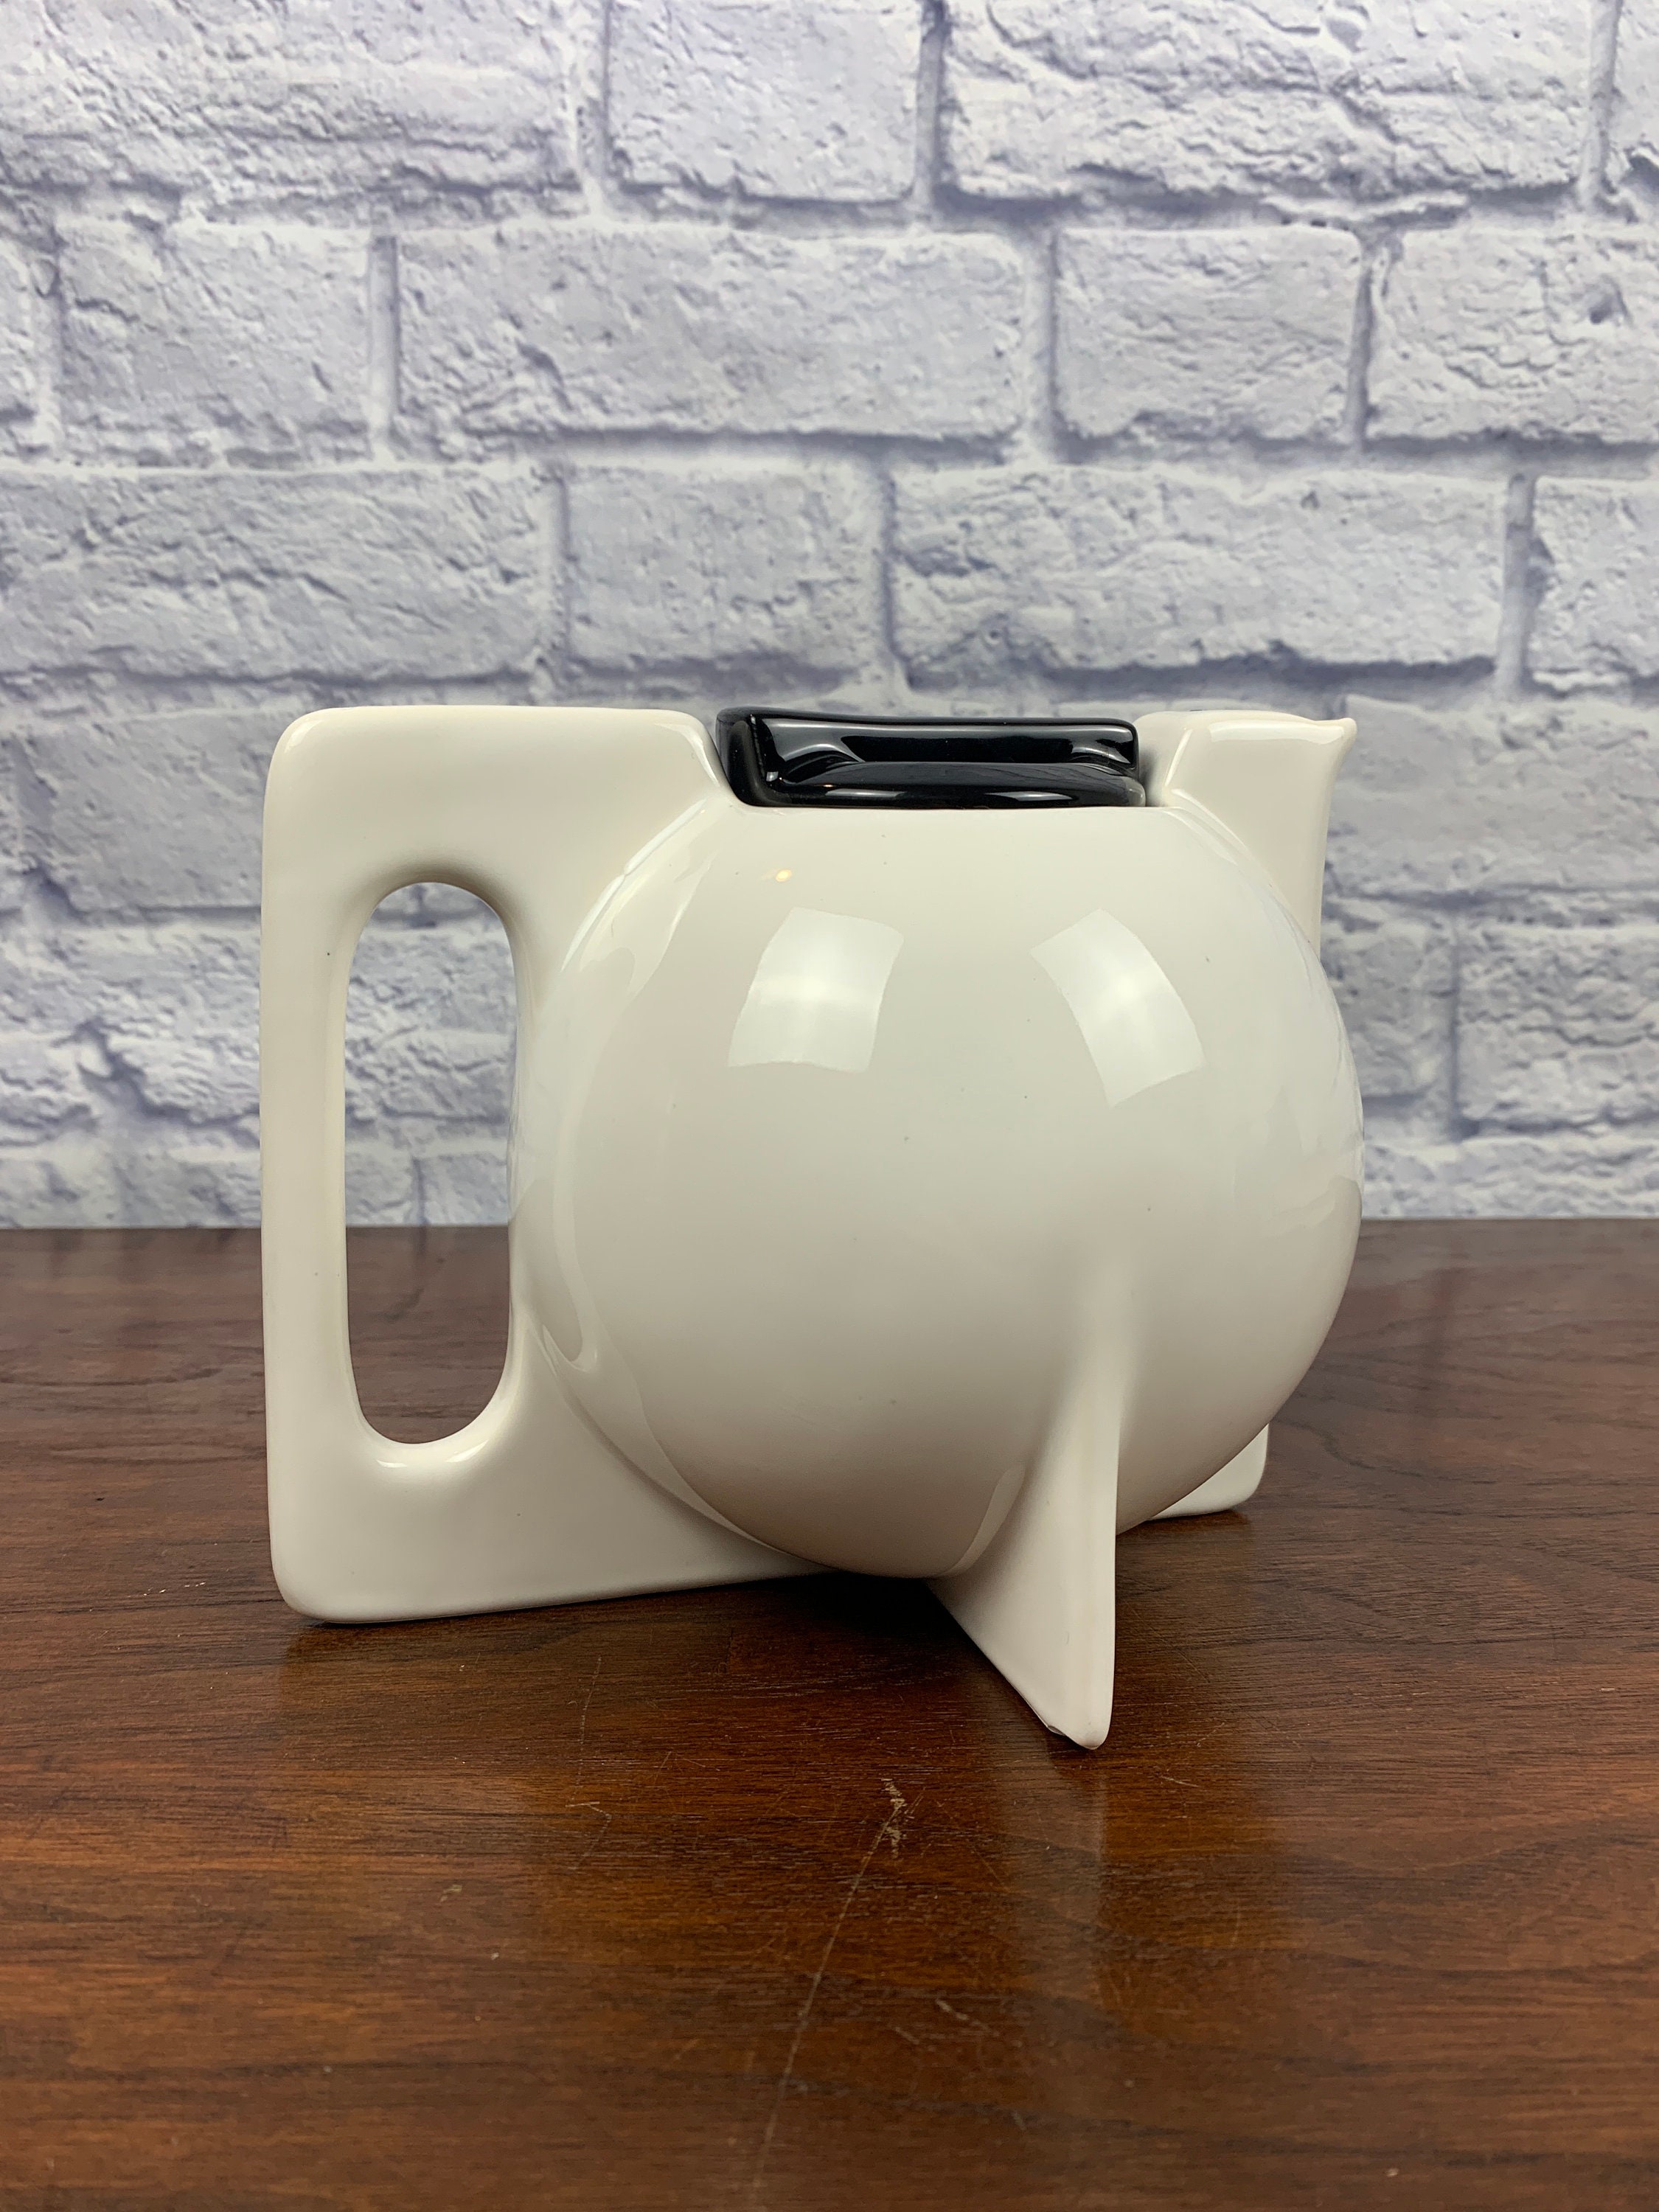 elke dag eindpunt magnifiek Bauhaus Ceramic Teapot White with Black Lid Geometric Shape - Etsy België